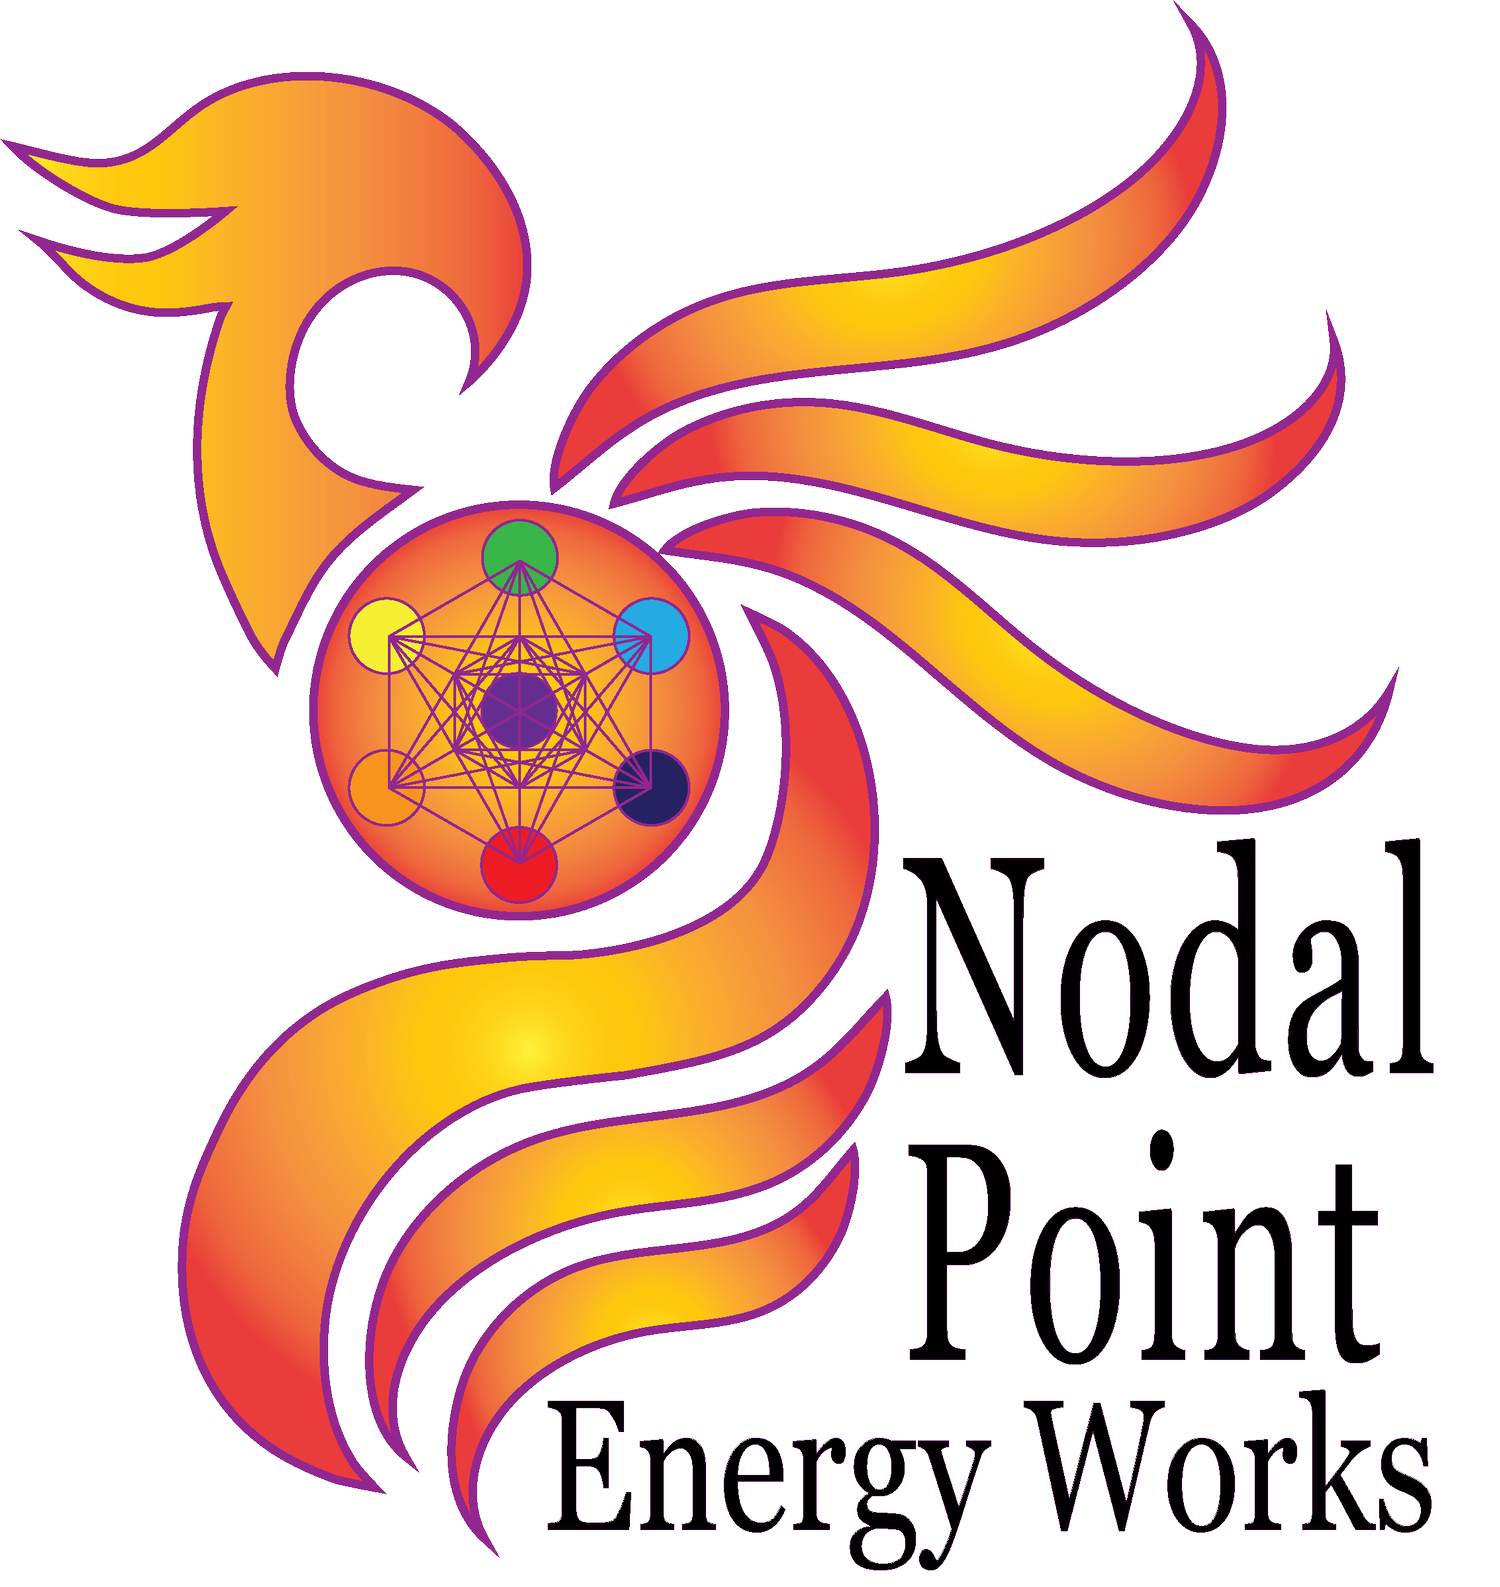 Nodal Point Energy Works